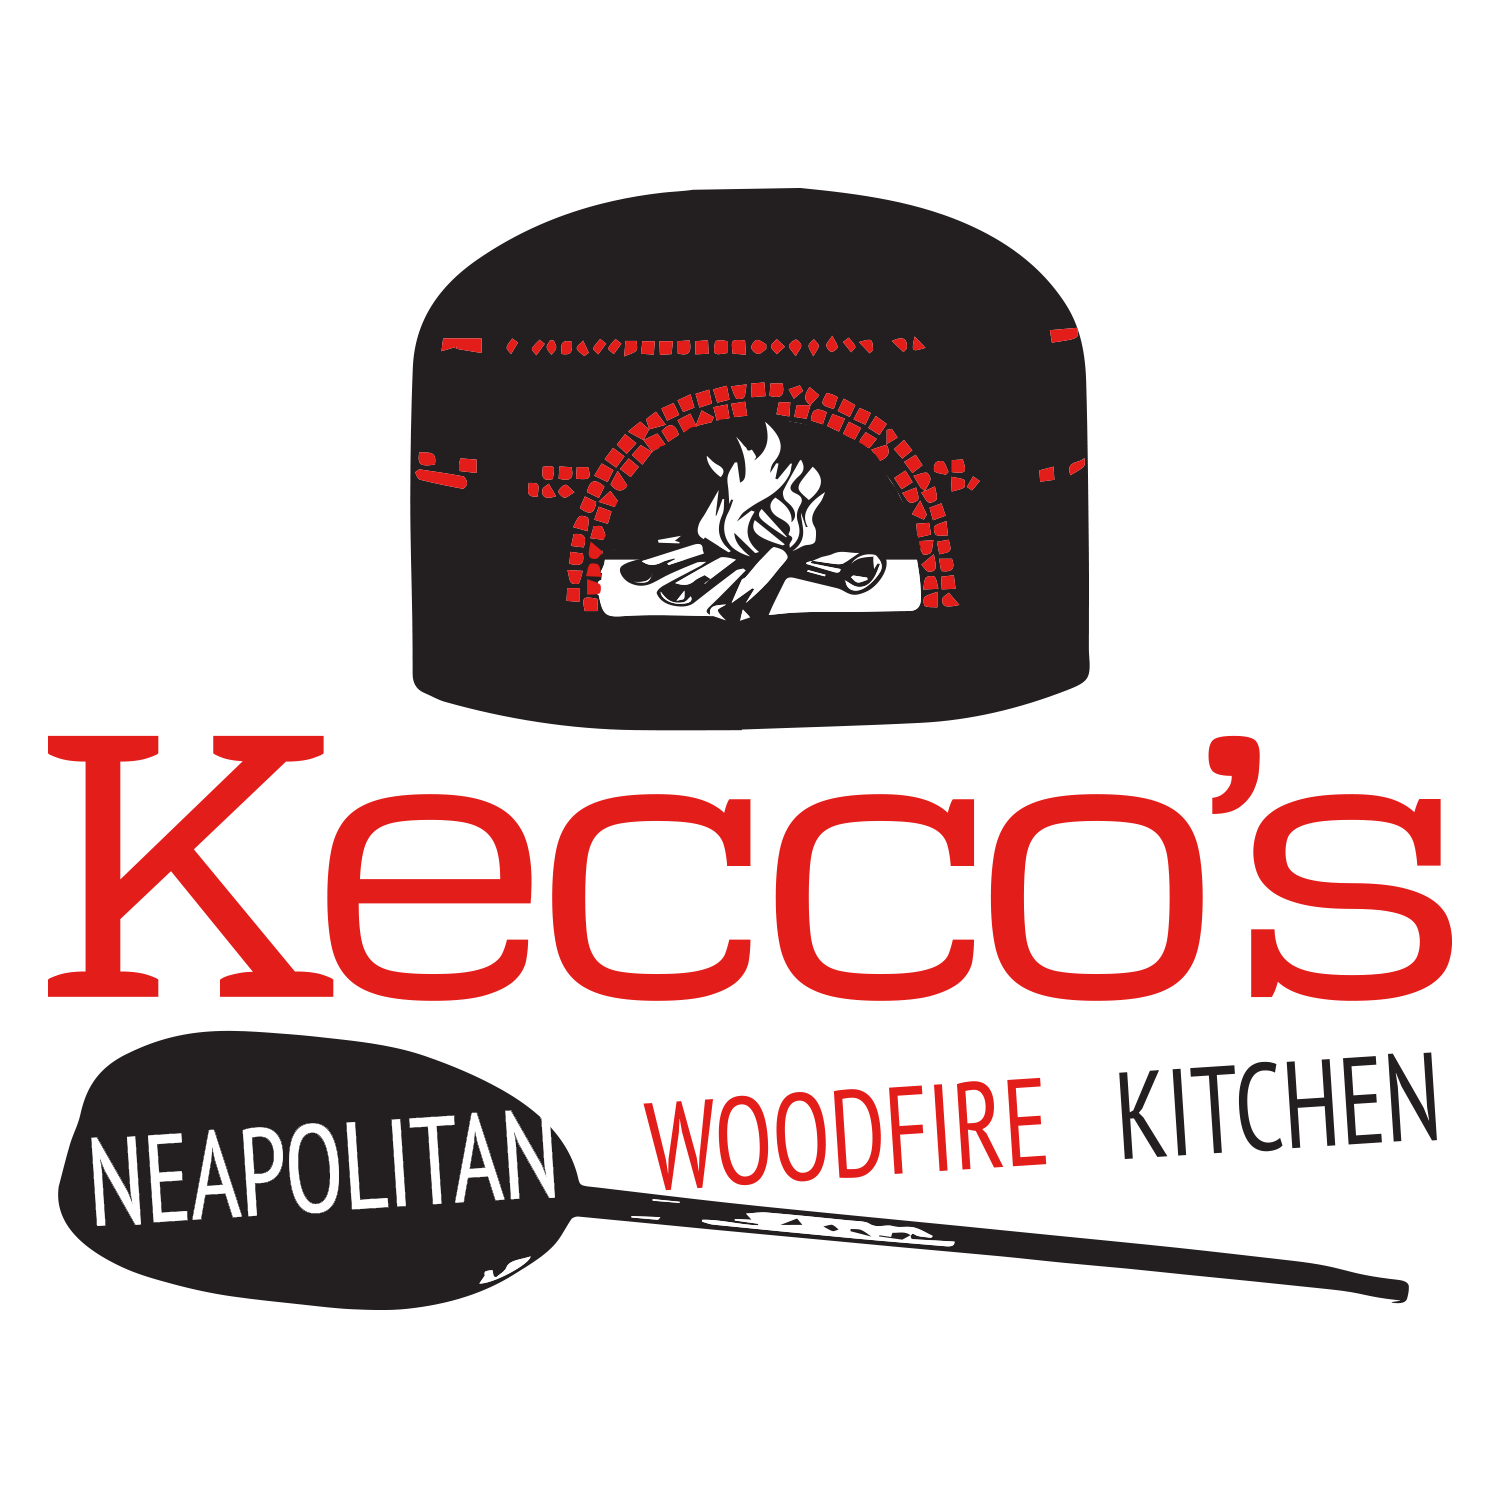 Kecco’s Woodfire Kitchen